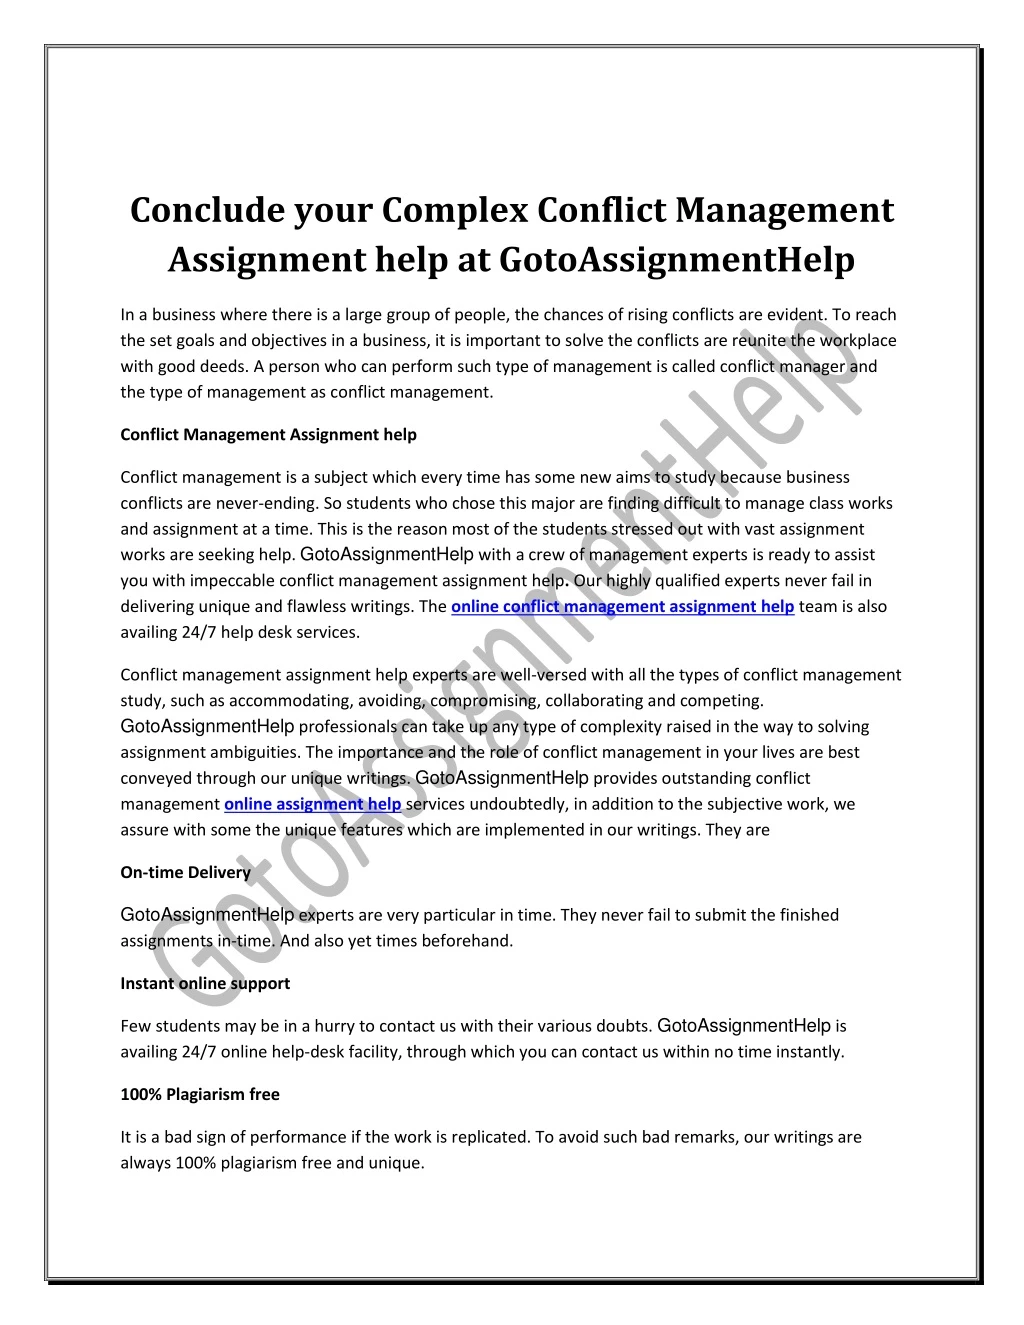 conclude your complex conflict management